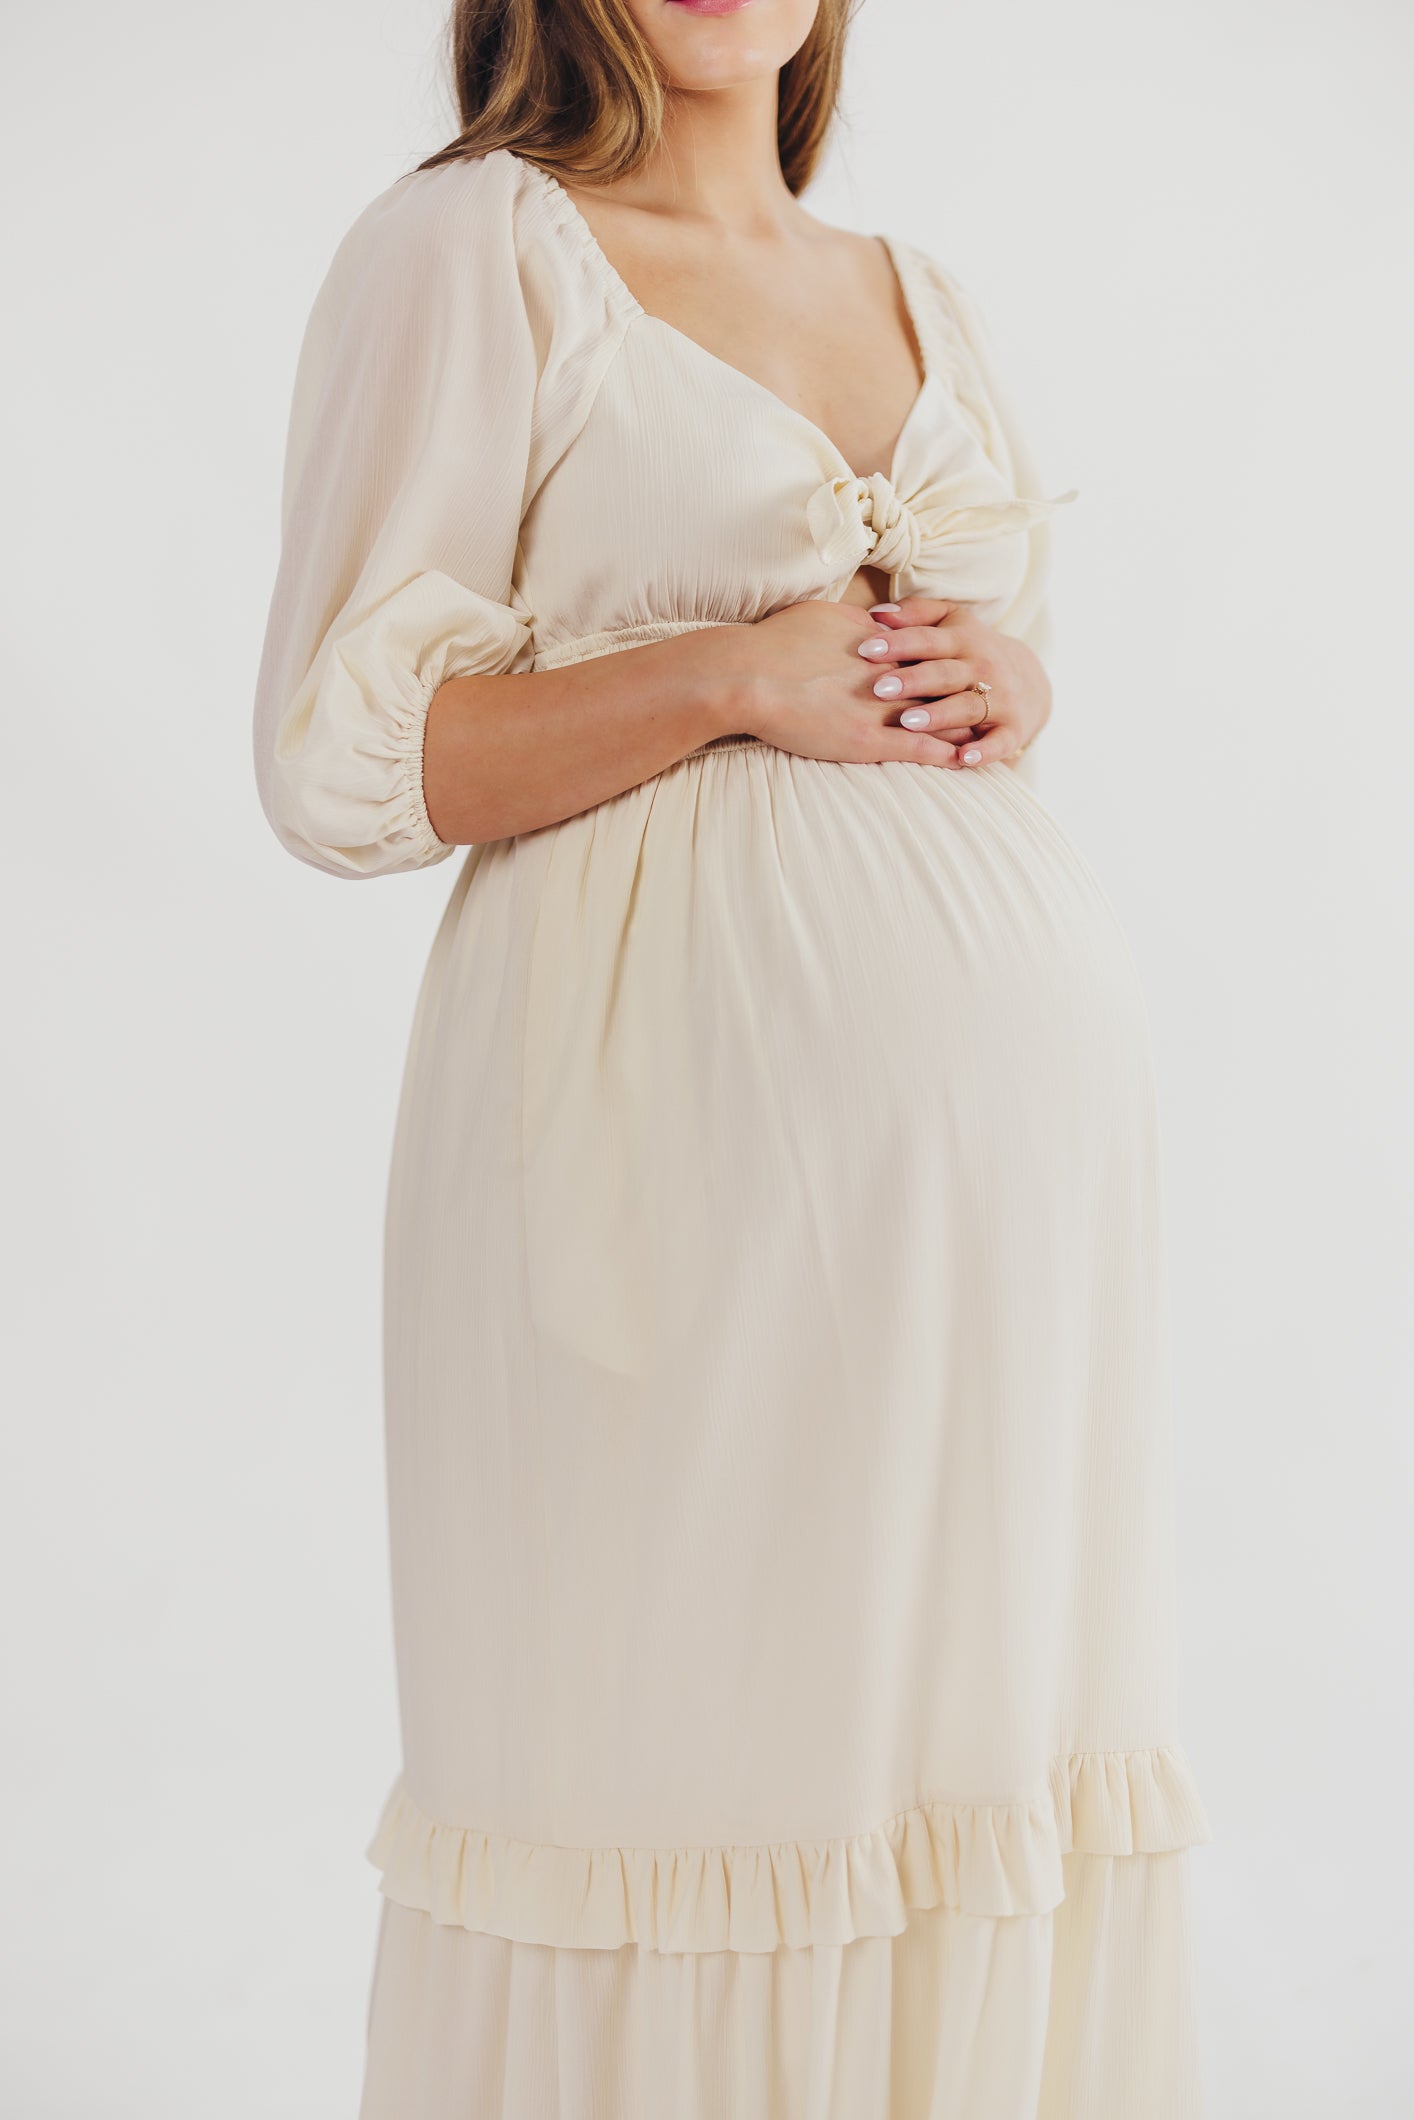 Eleanor Ruffle Detail Maxi Dress in Cream - Bump Friendly & Inclusive Sizing (S-3XL)